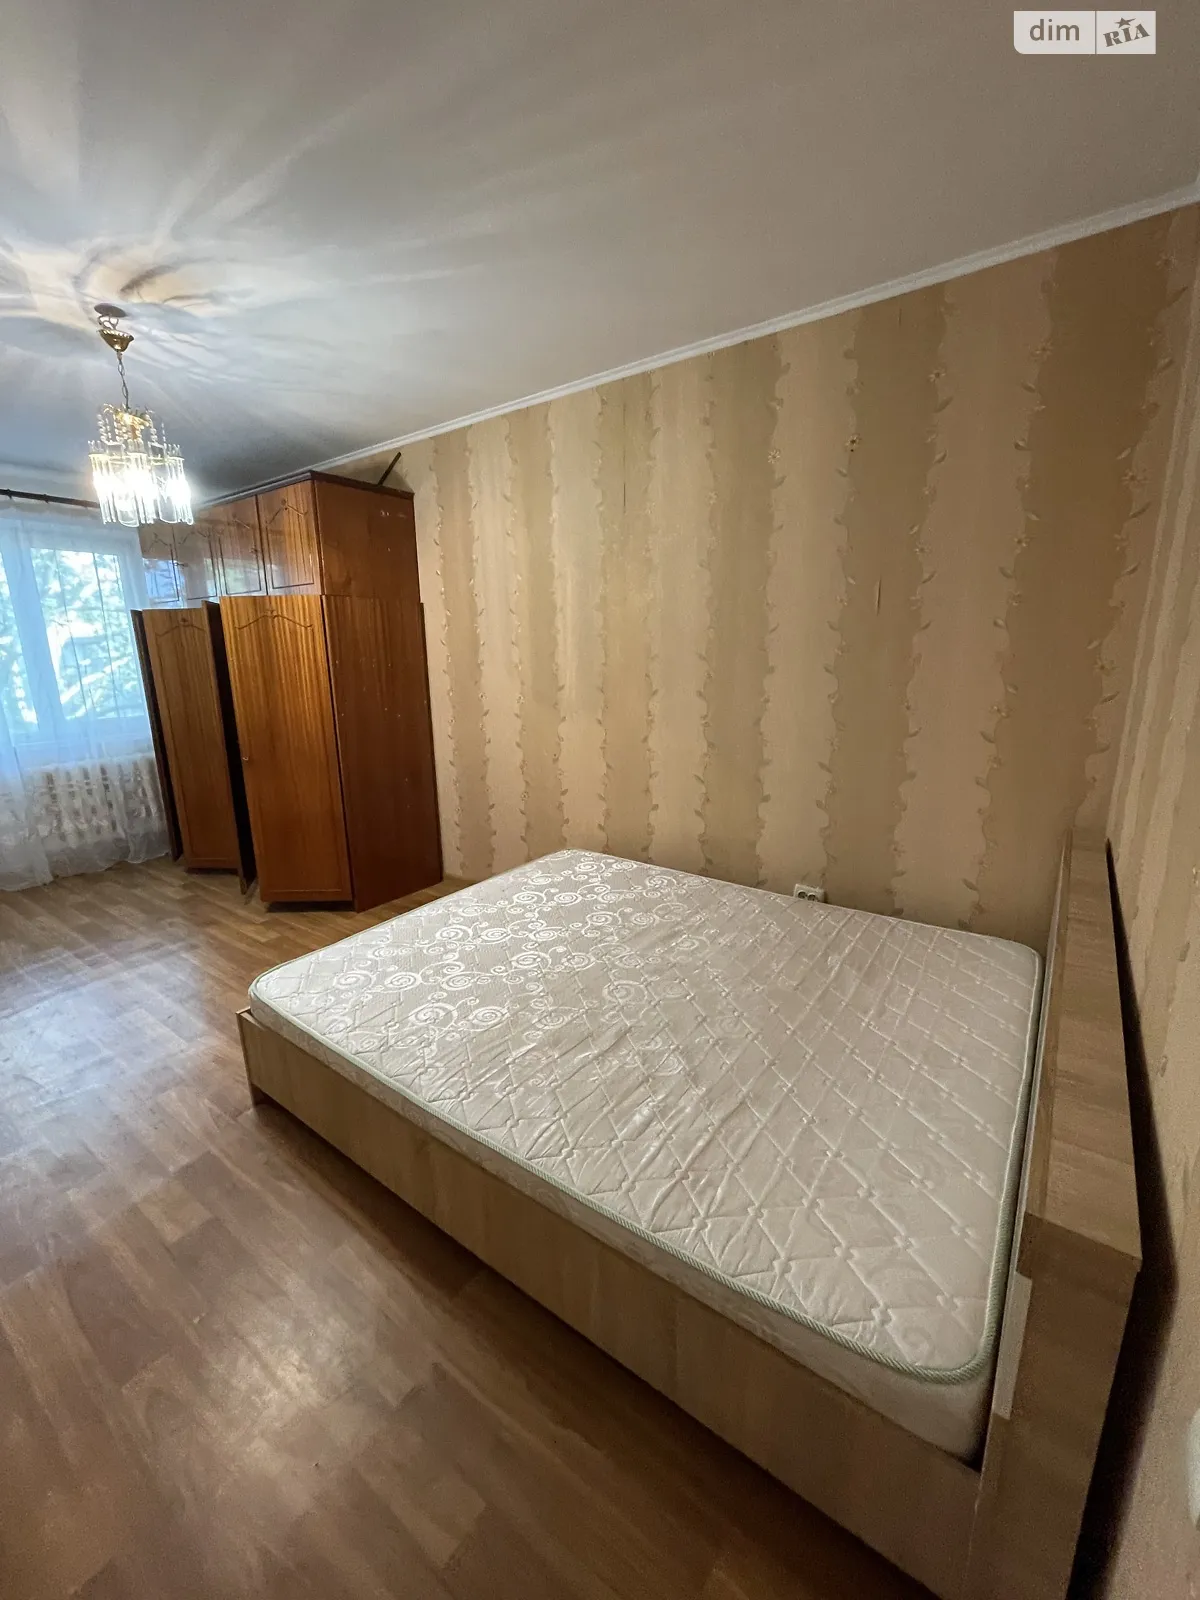 Сдается в аренду 2-комнатная квартира 44 кв. м в Одессе, ул. Академика Филатова, 49 - фото 1